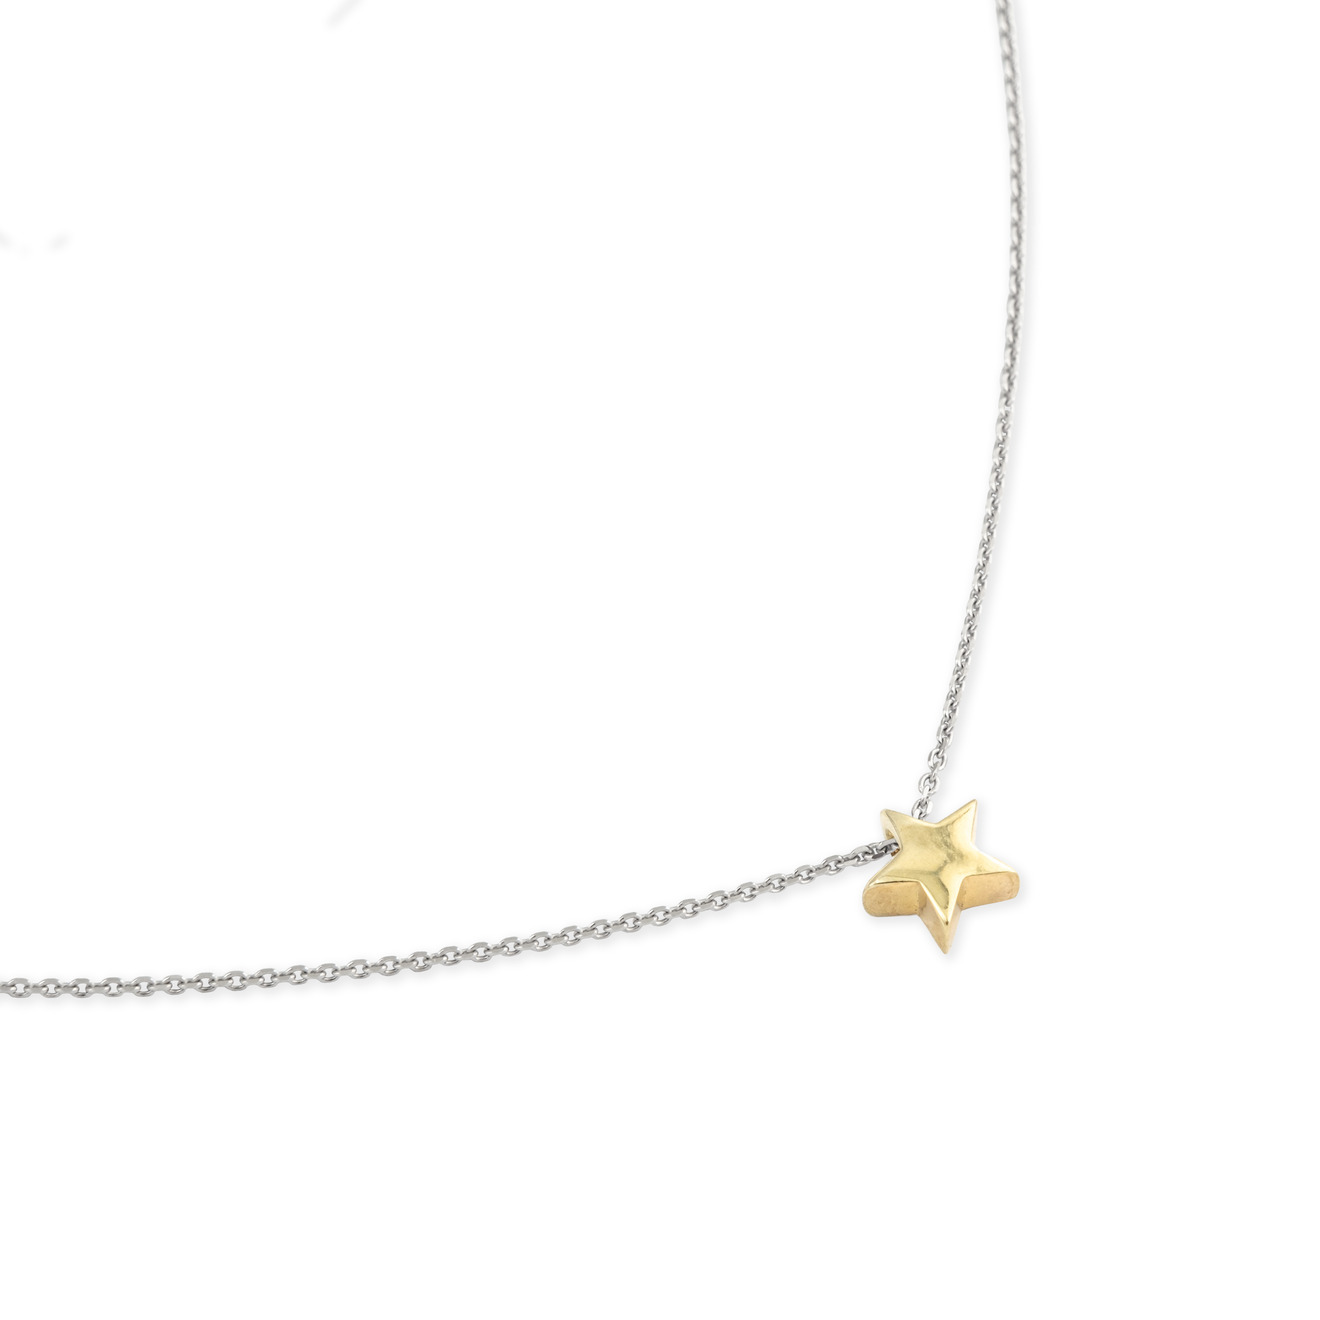 УРА jewelry Колье из серебра с подвеской-звездой